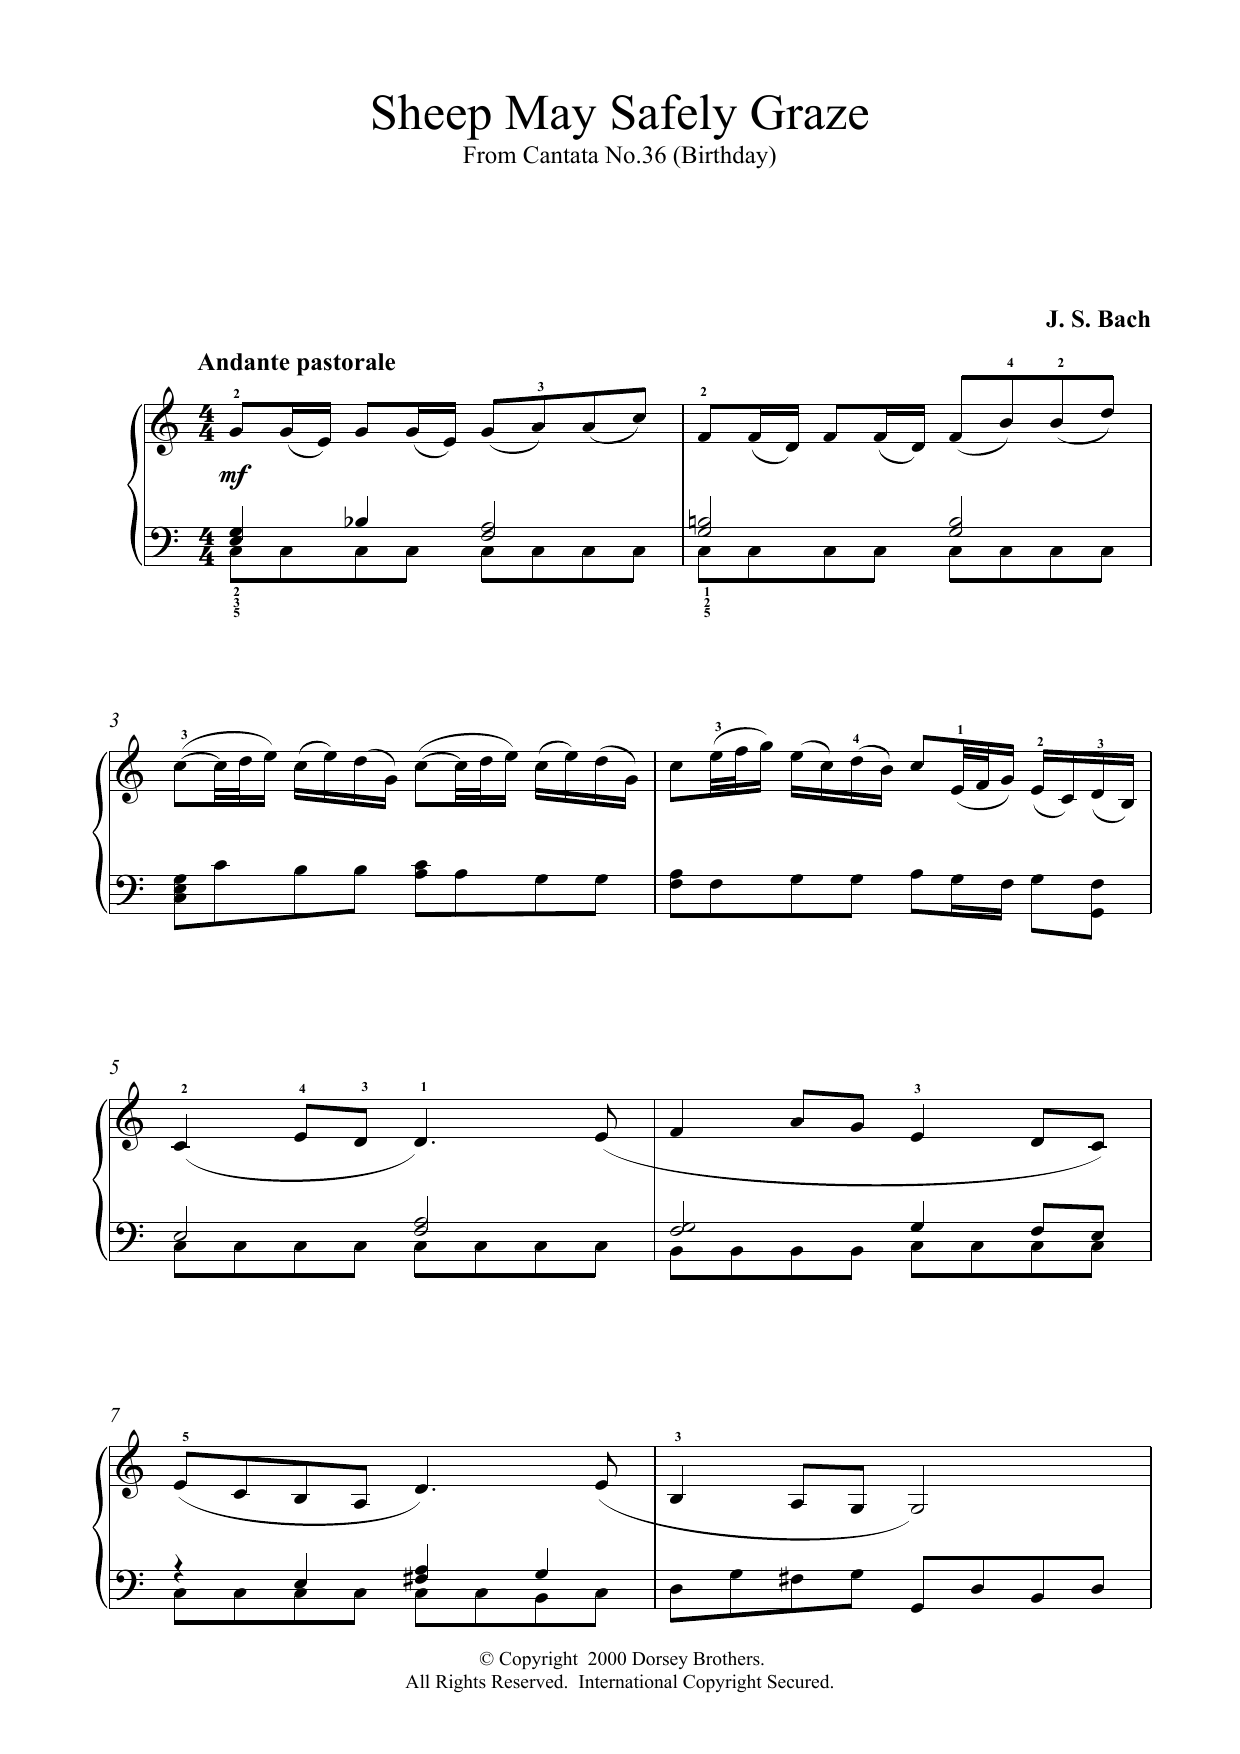 Johann Sebastian Bach Sheep May Safely Graze sheet music notes and chords. Download Printable PDF.